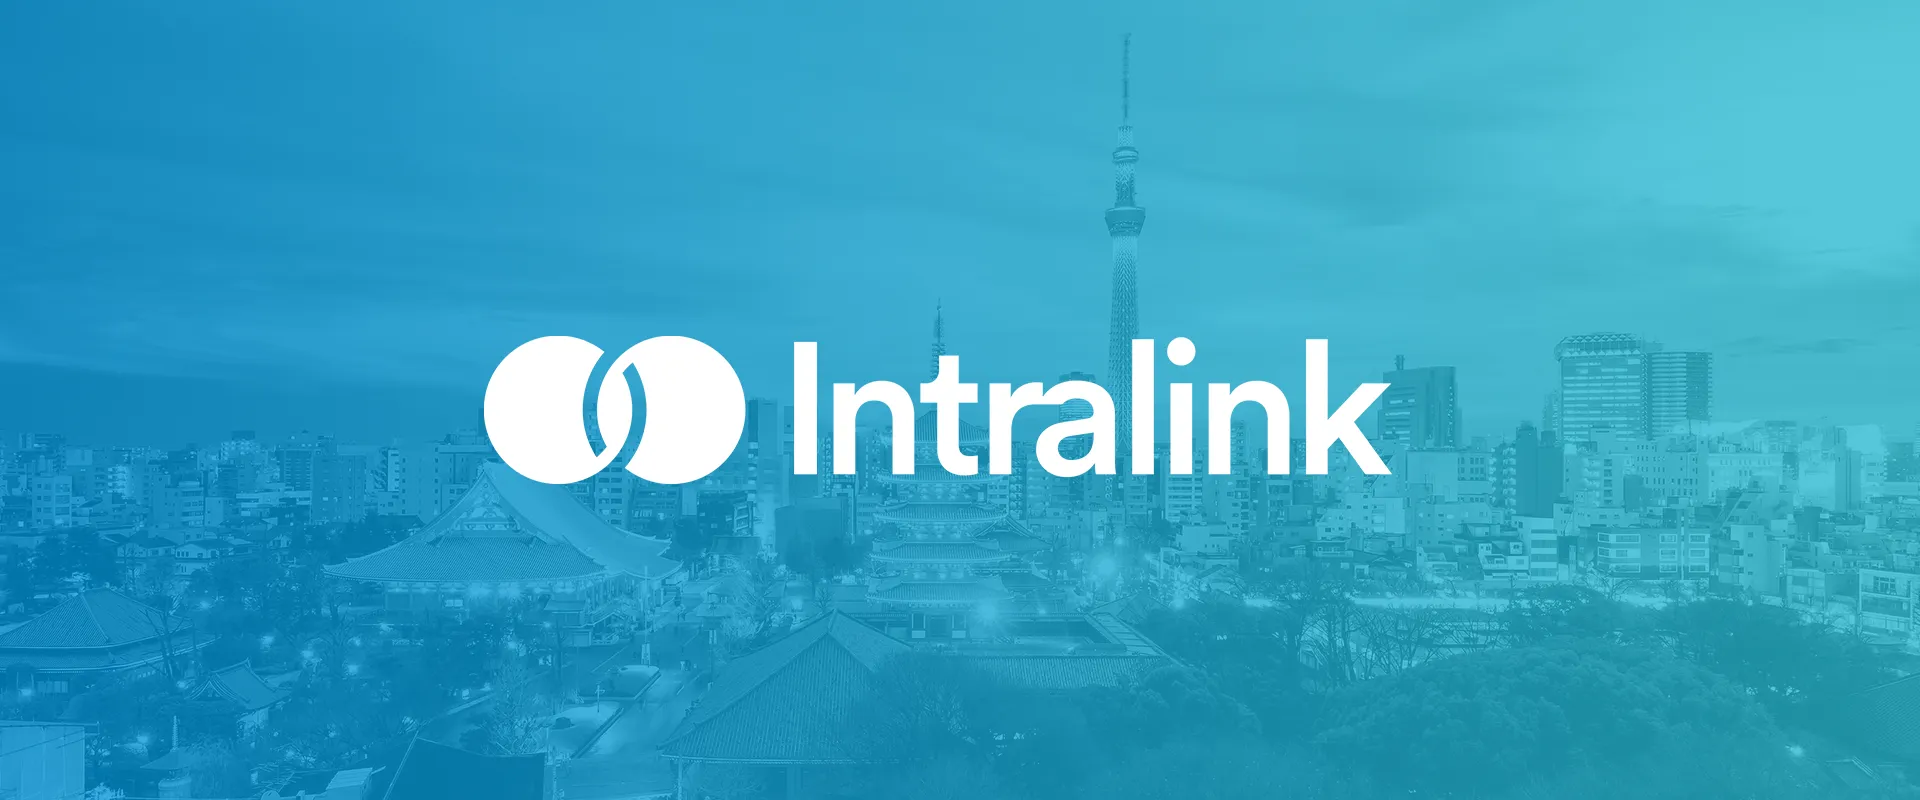 Intralink international consultancy brand